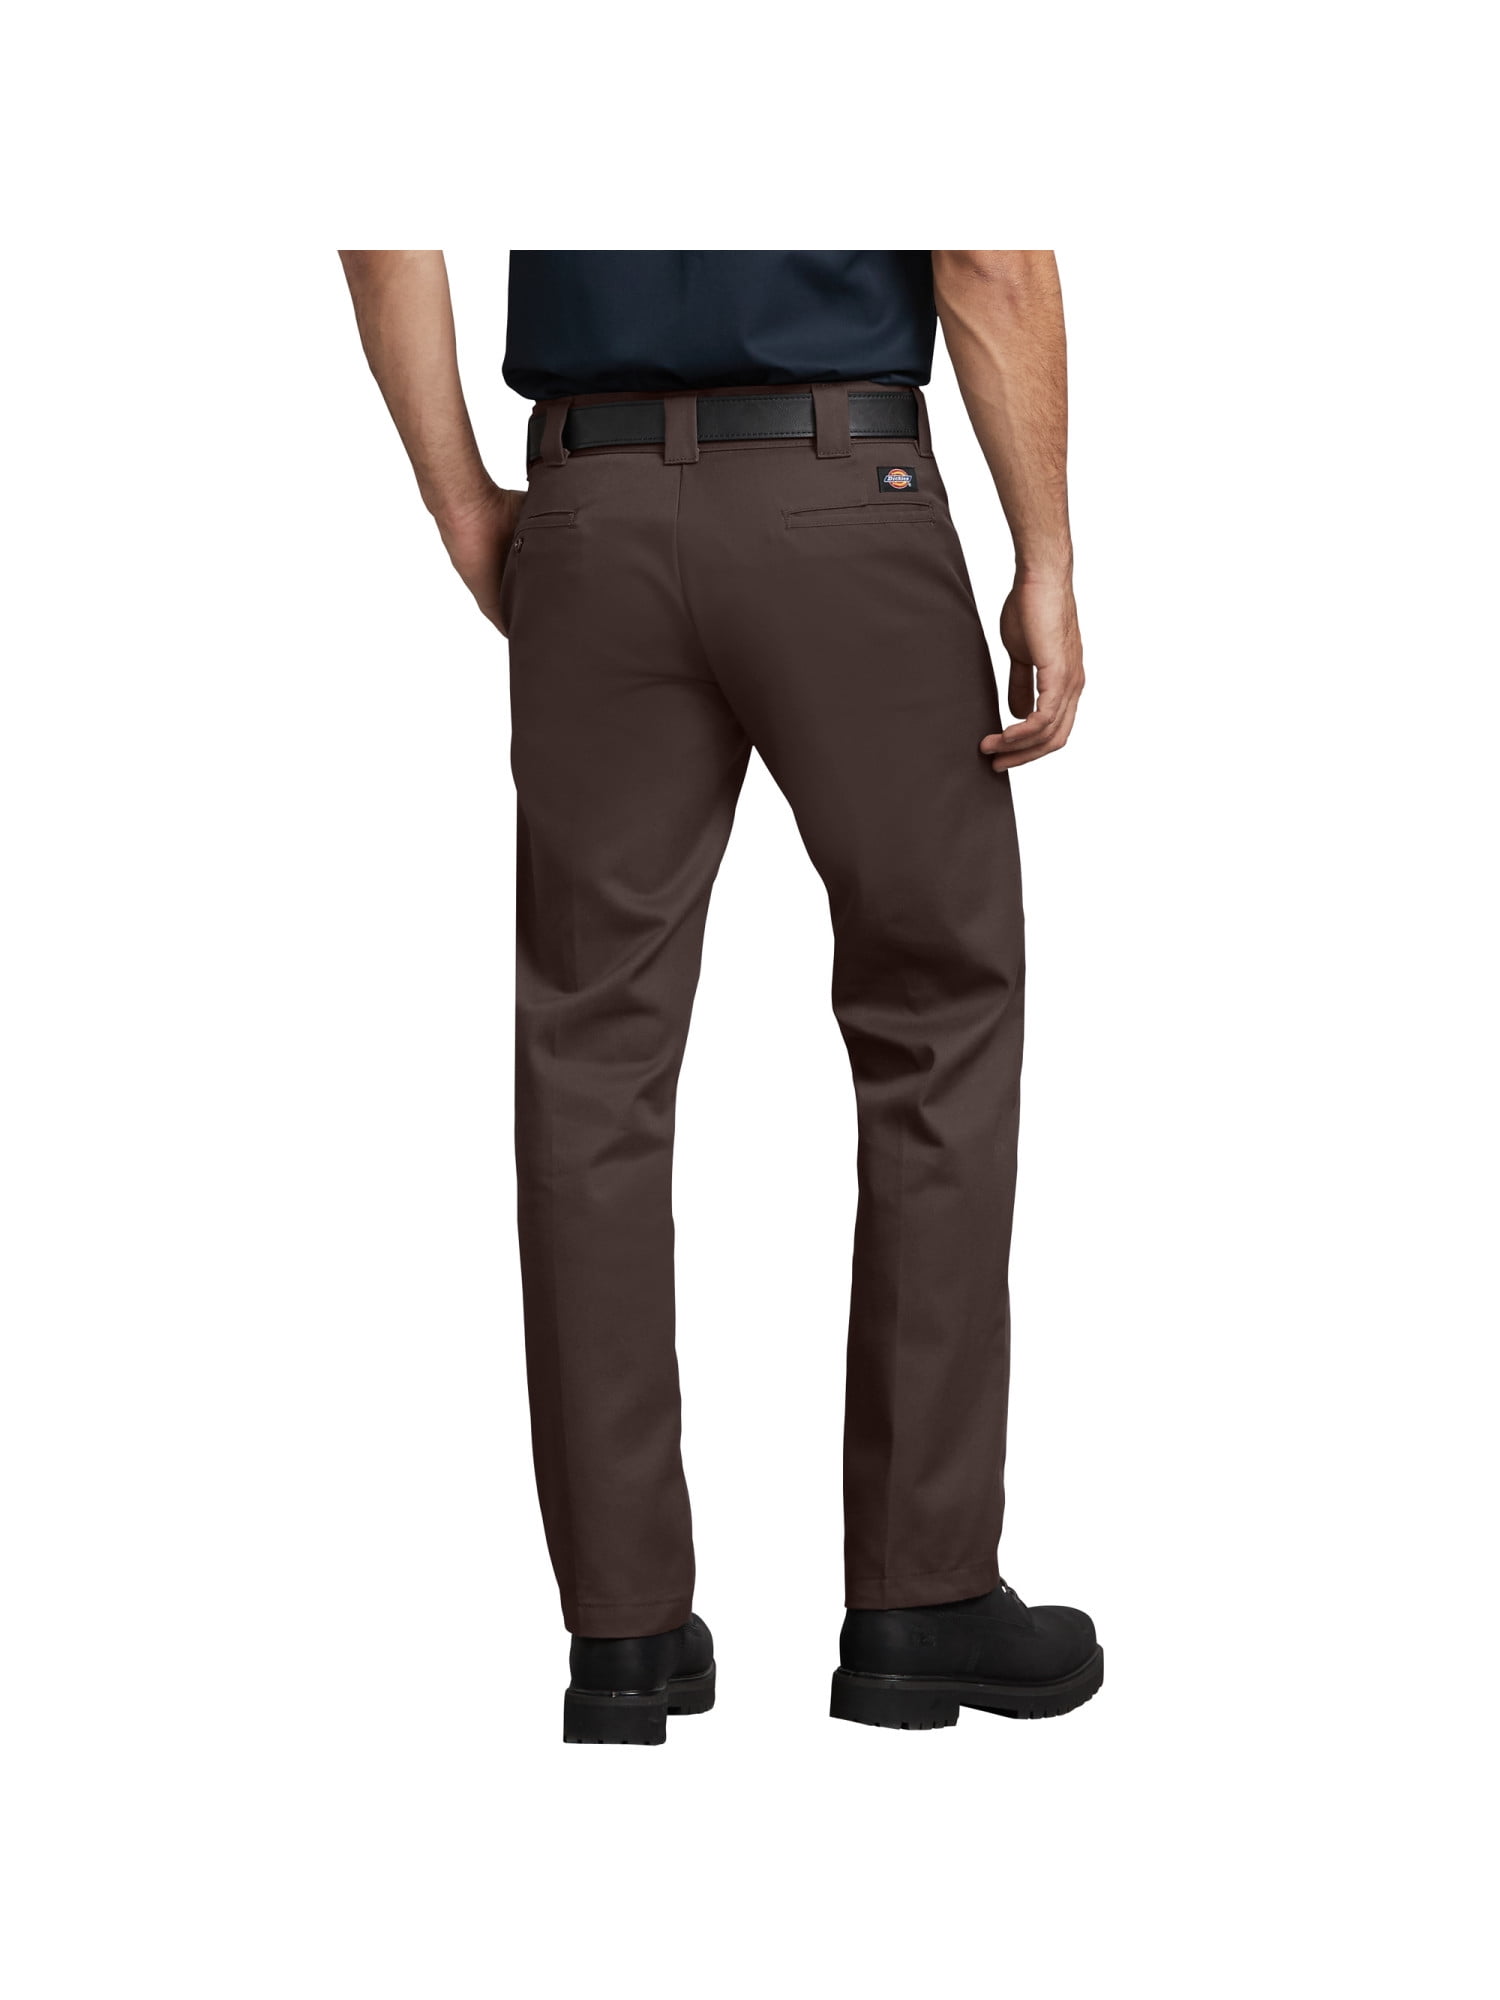 Dickies Mens Slim Fit Straight Leg Work Pants - Walmart.com